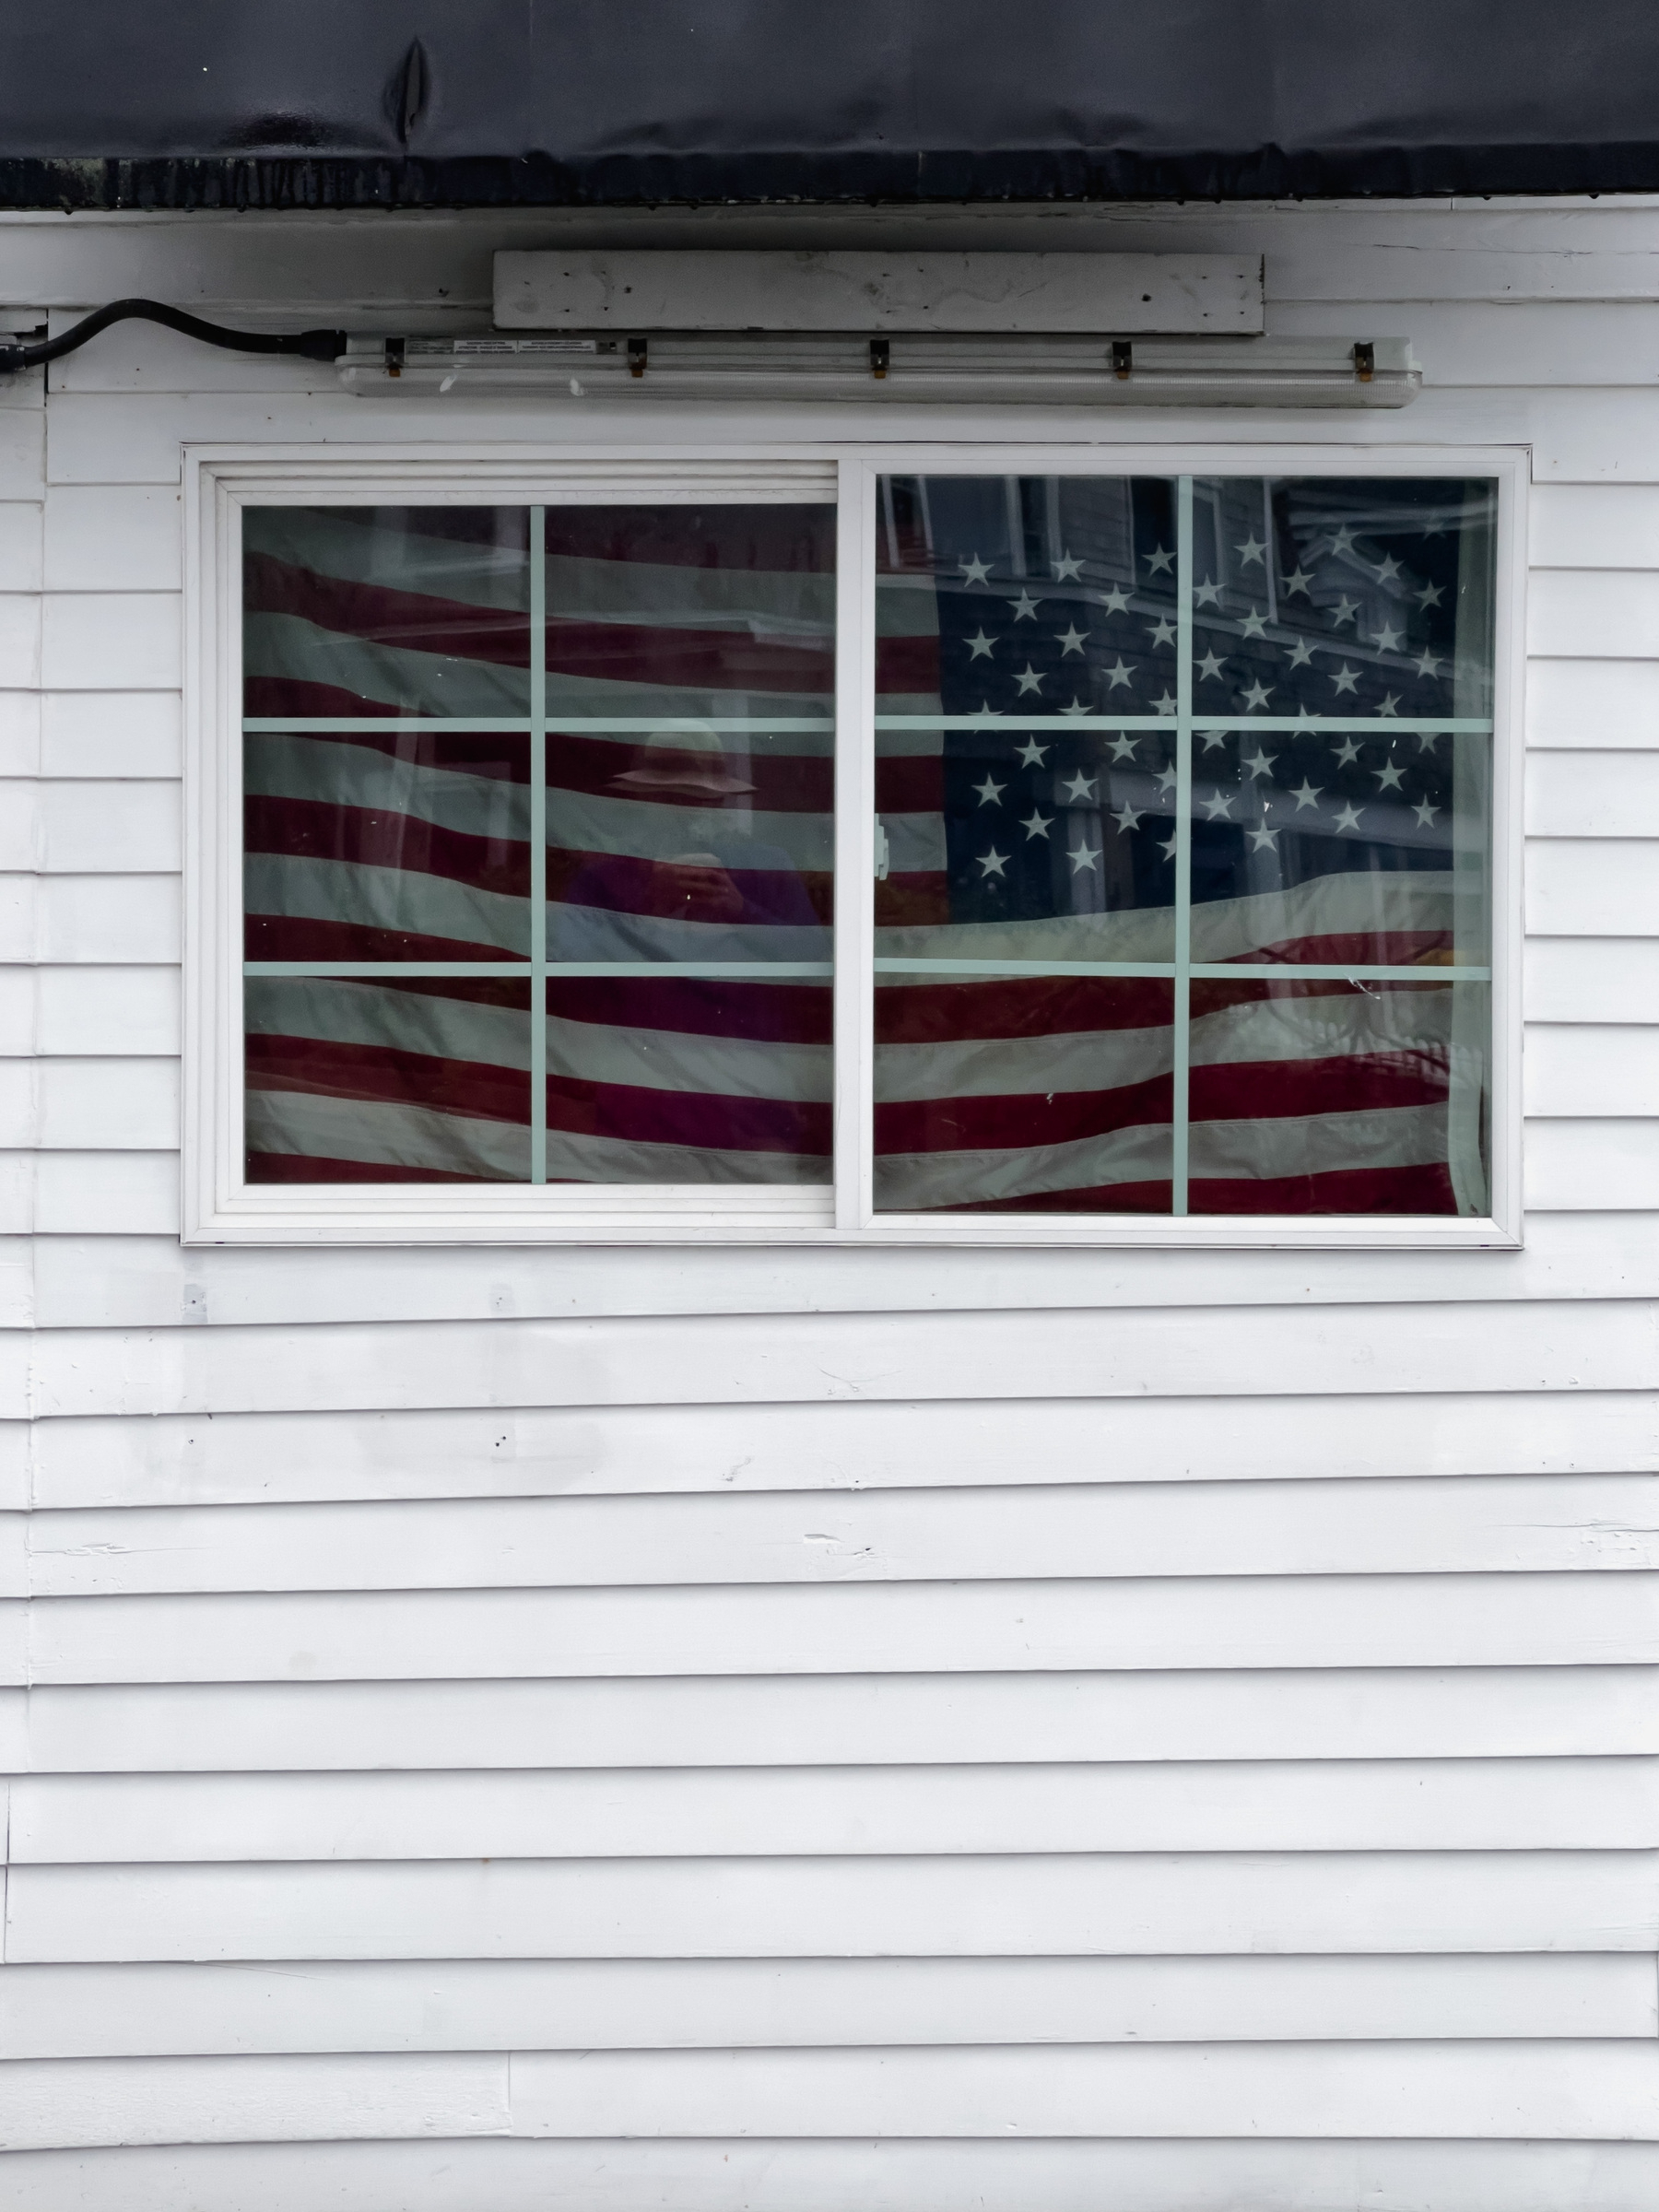 American flag in window in clapboard wall of building.